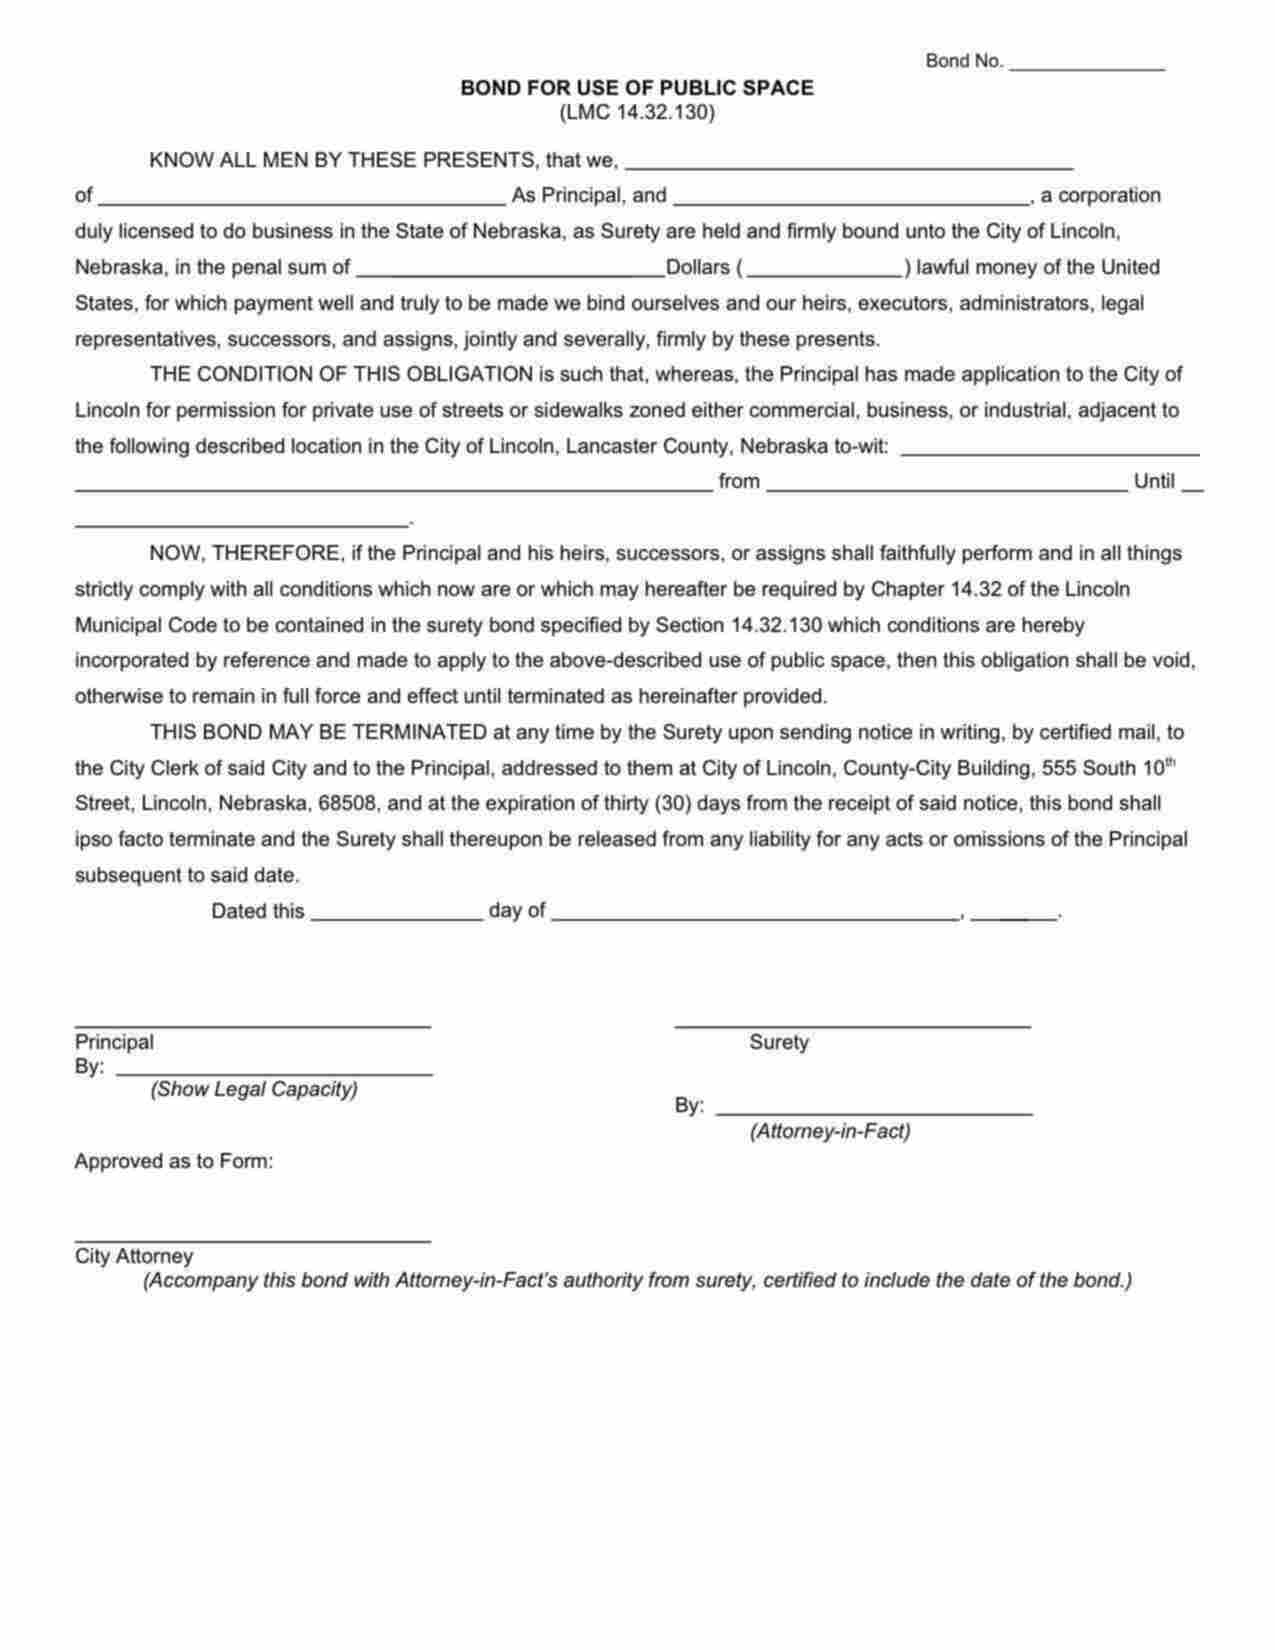 Nebraska User of Public Space (Special Event Permit) Bond Form